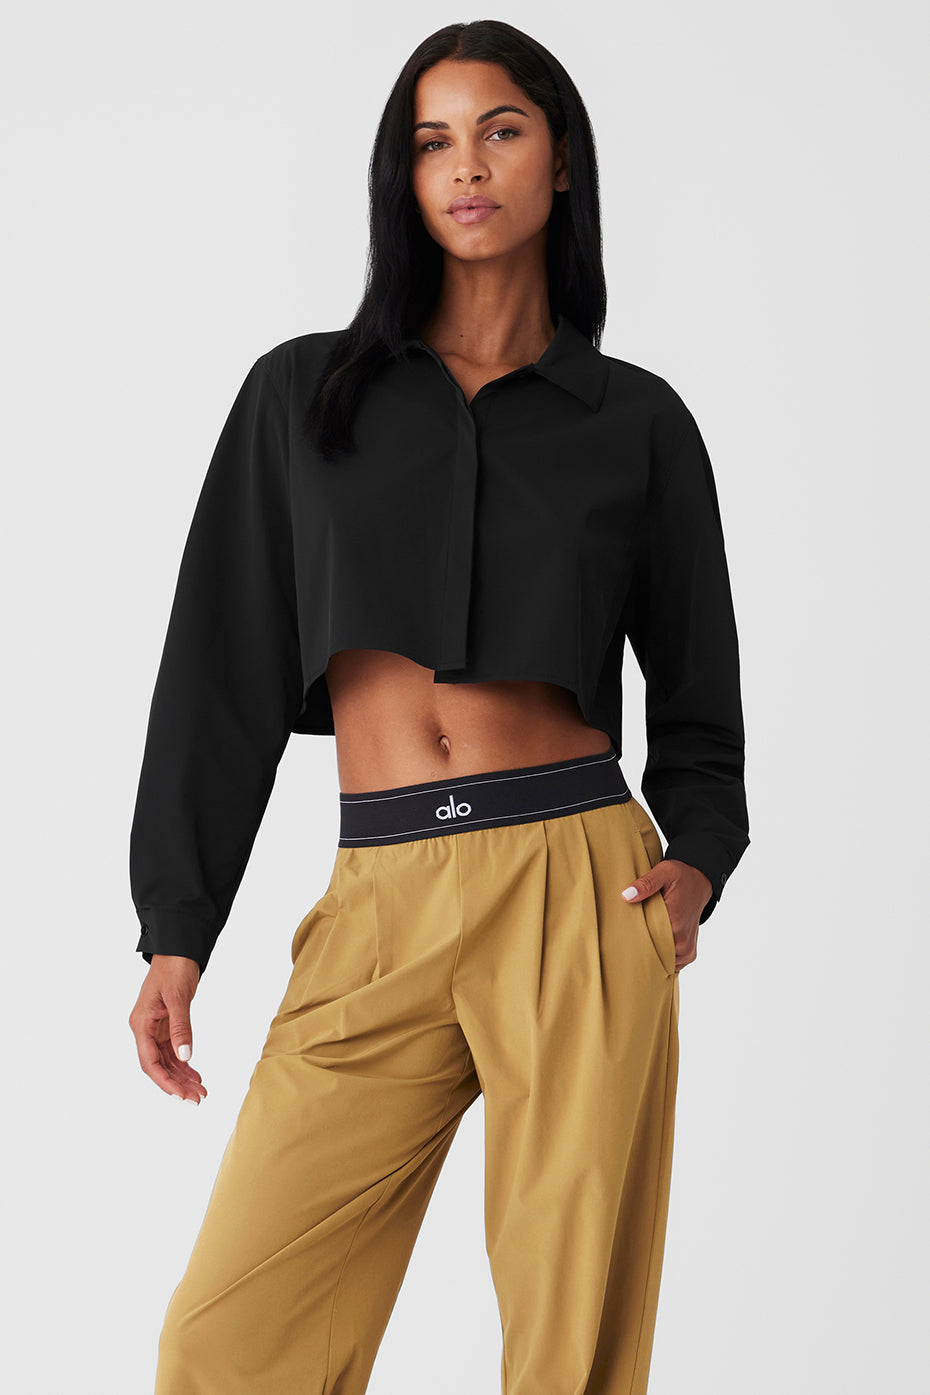 Alo Yoga  Cropped Elevation Coverup Jacket in Black, Size: XS - ShopStyle